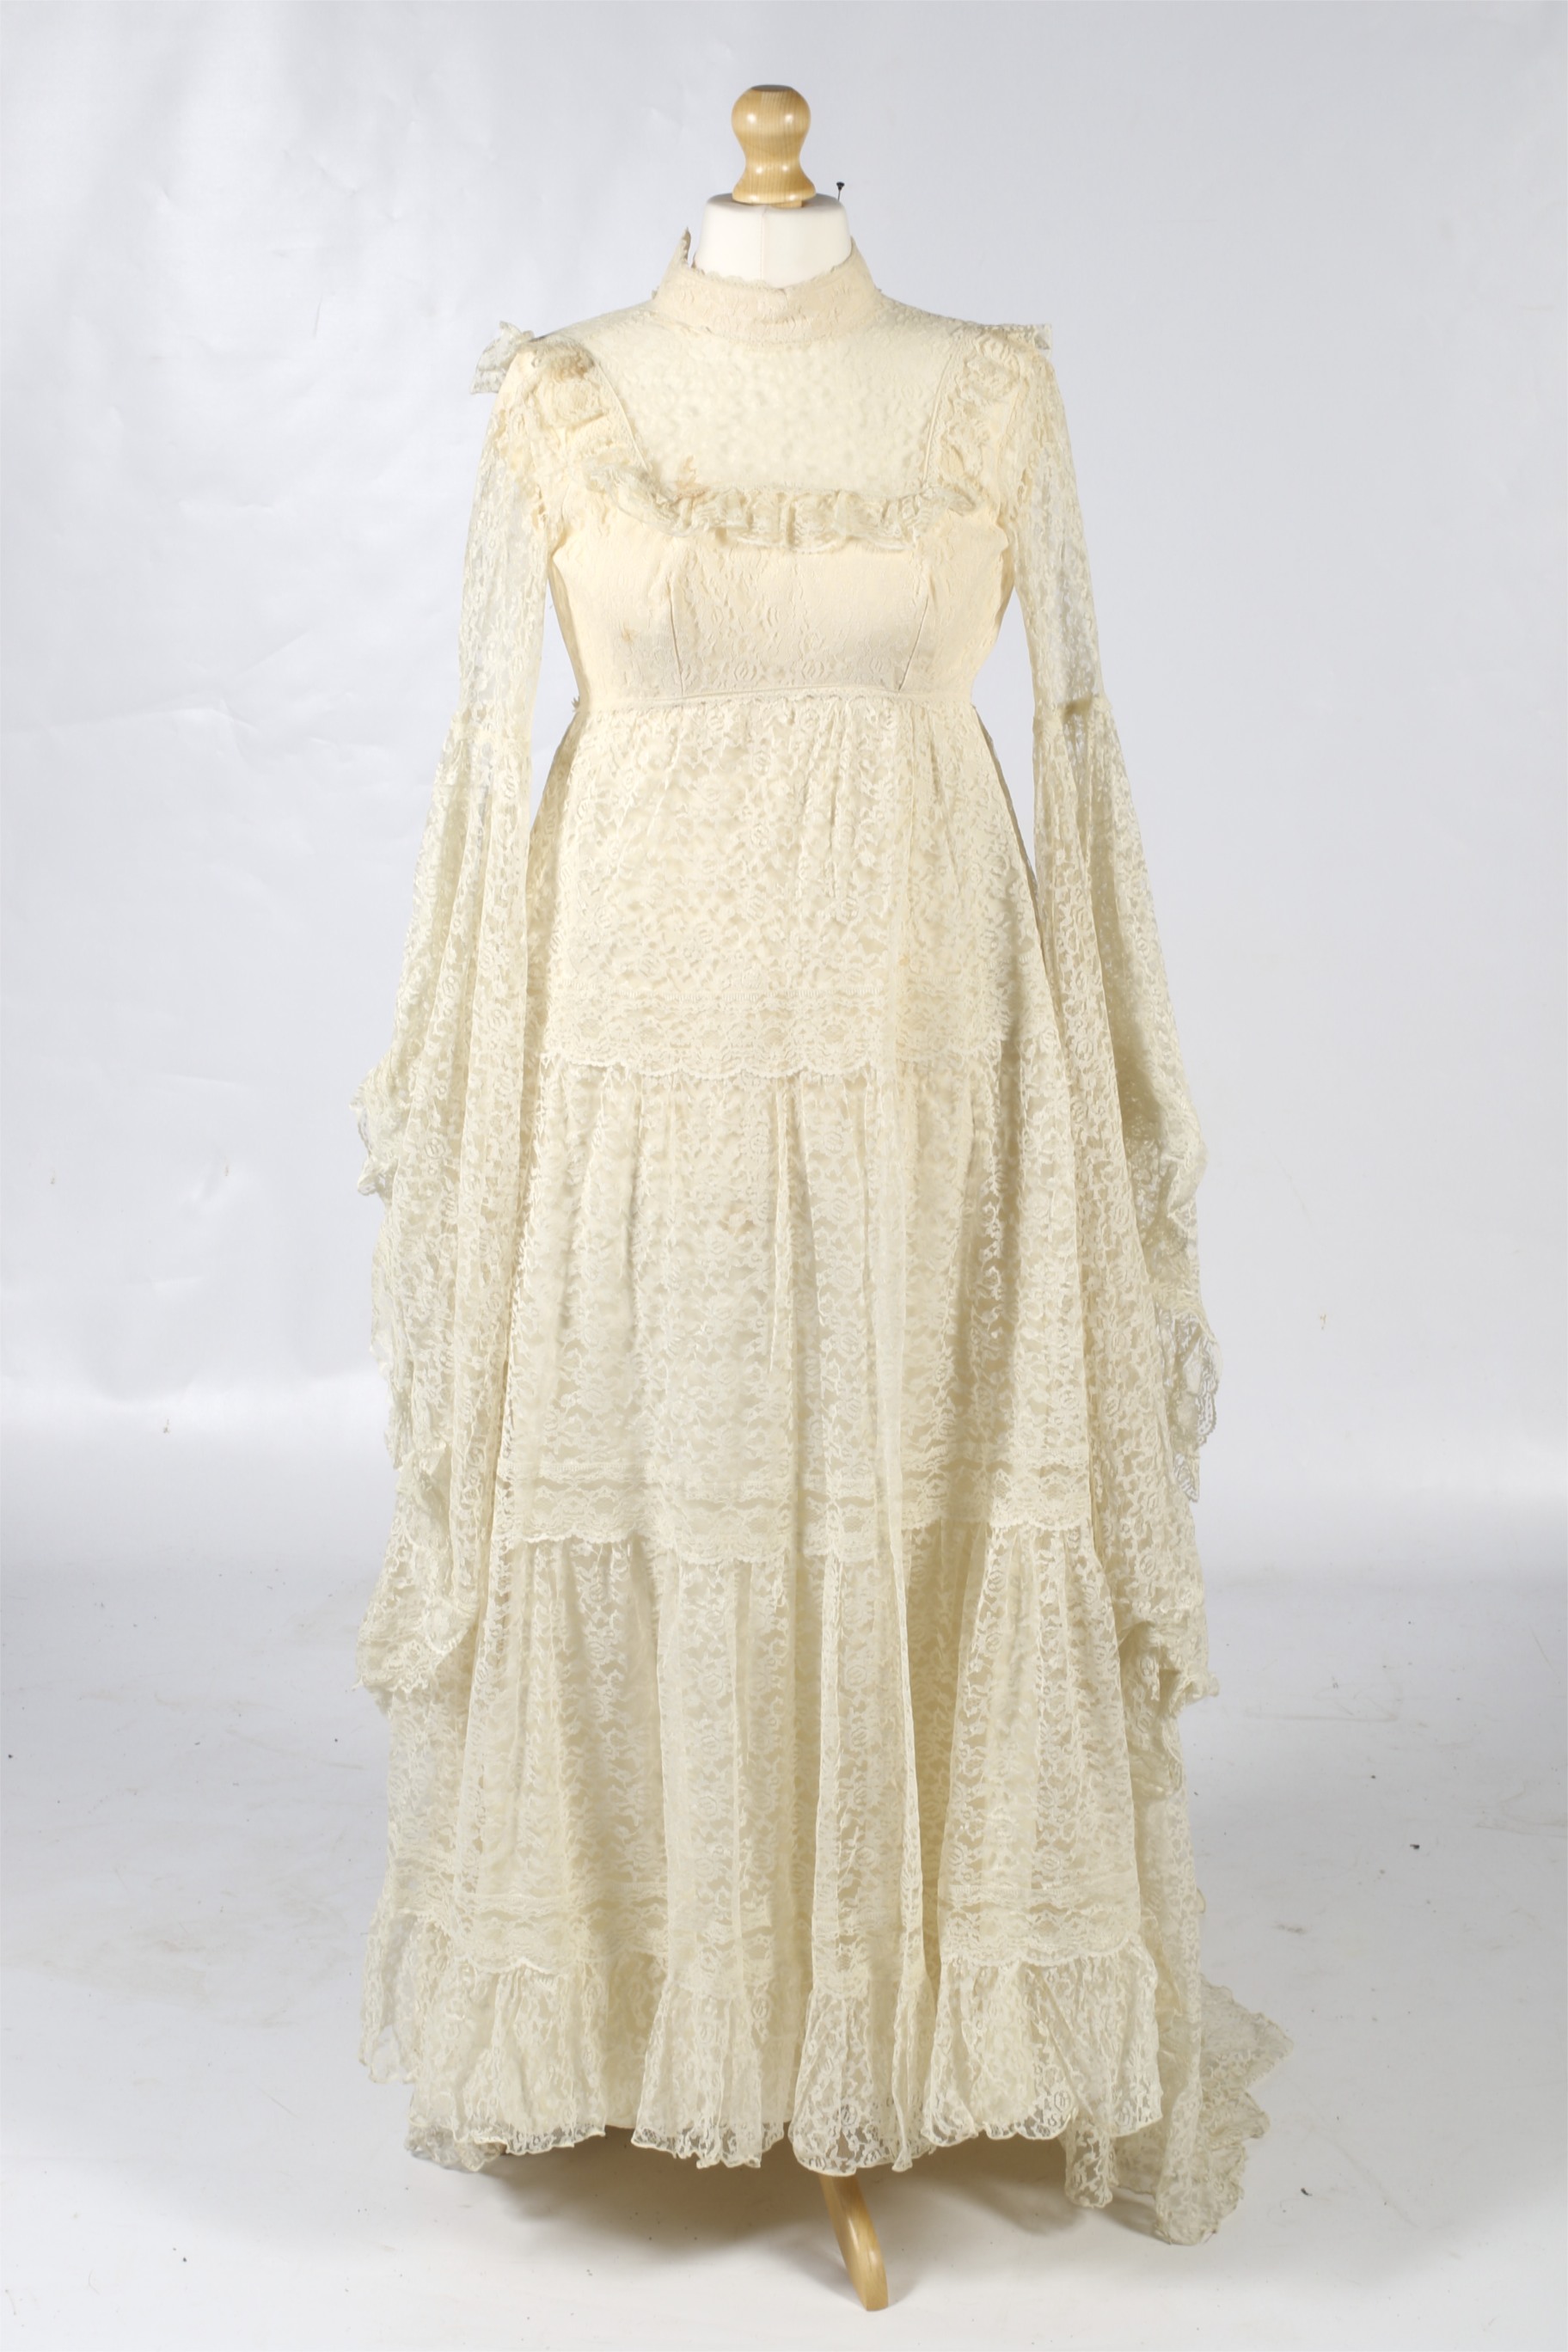 A 20th century wedding dress.